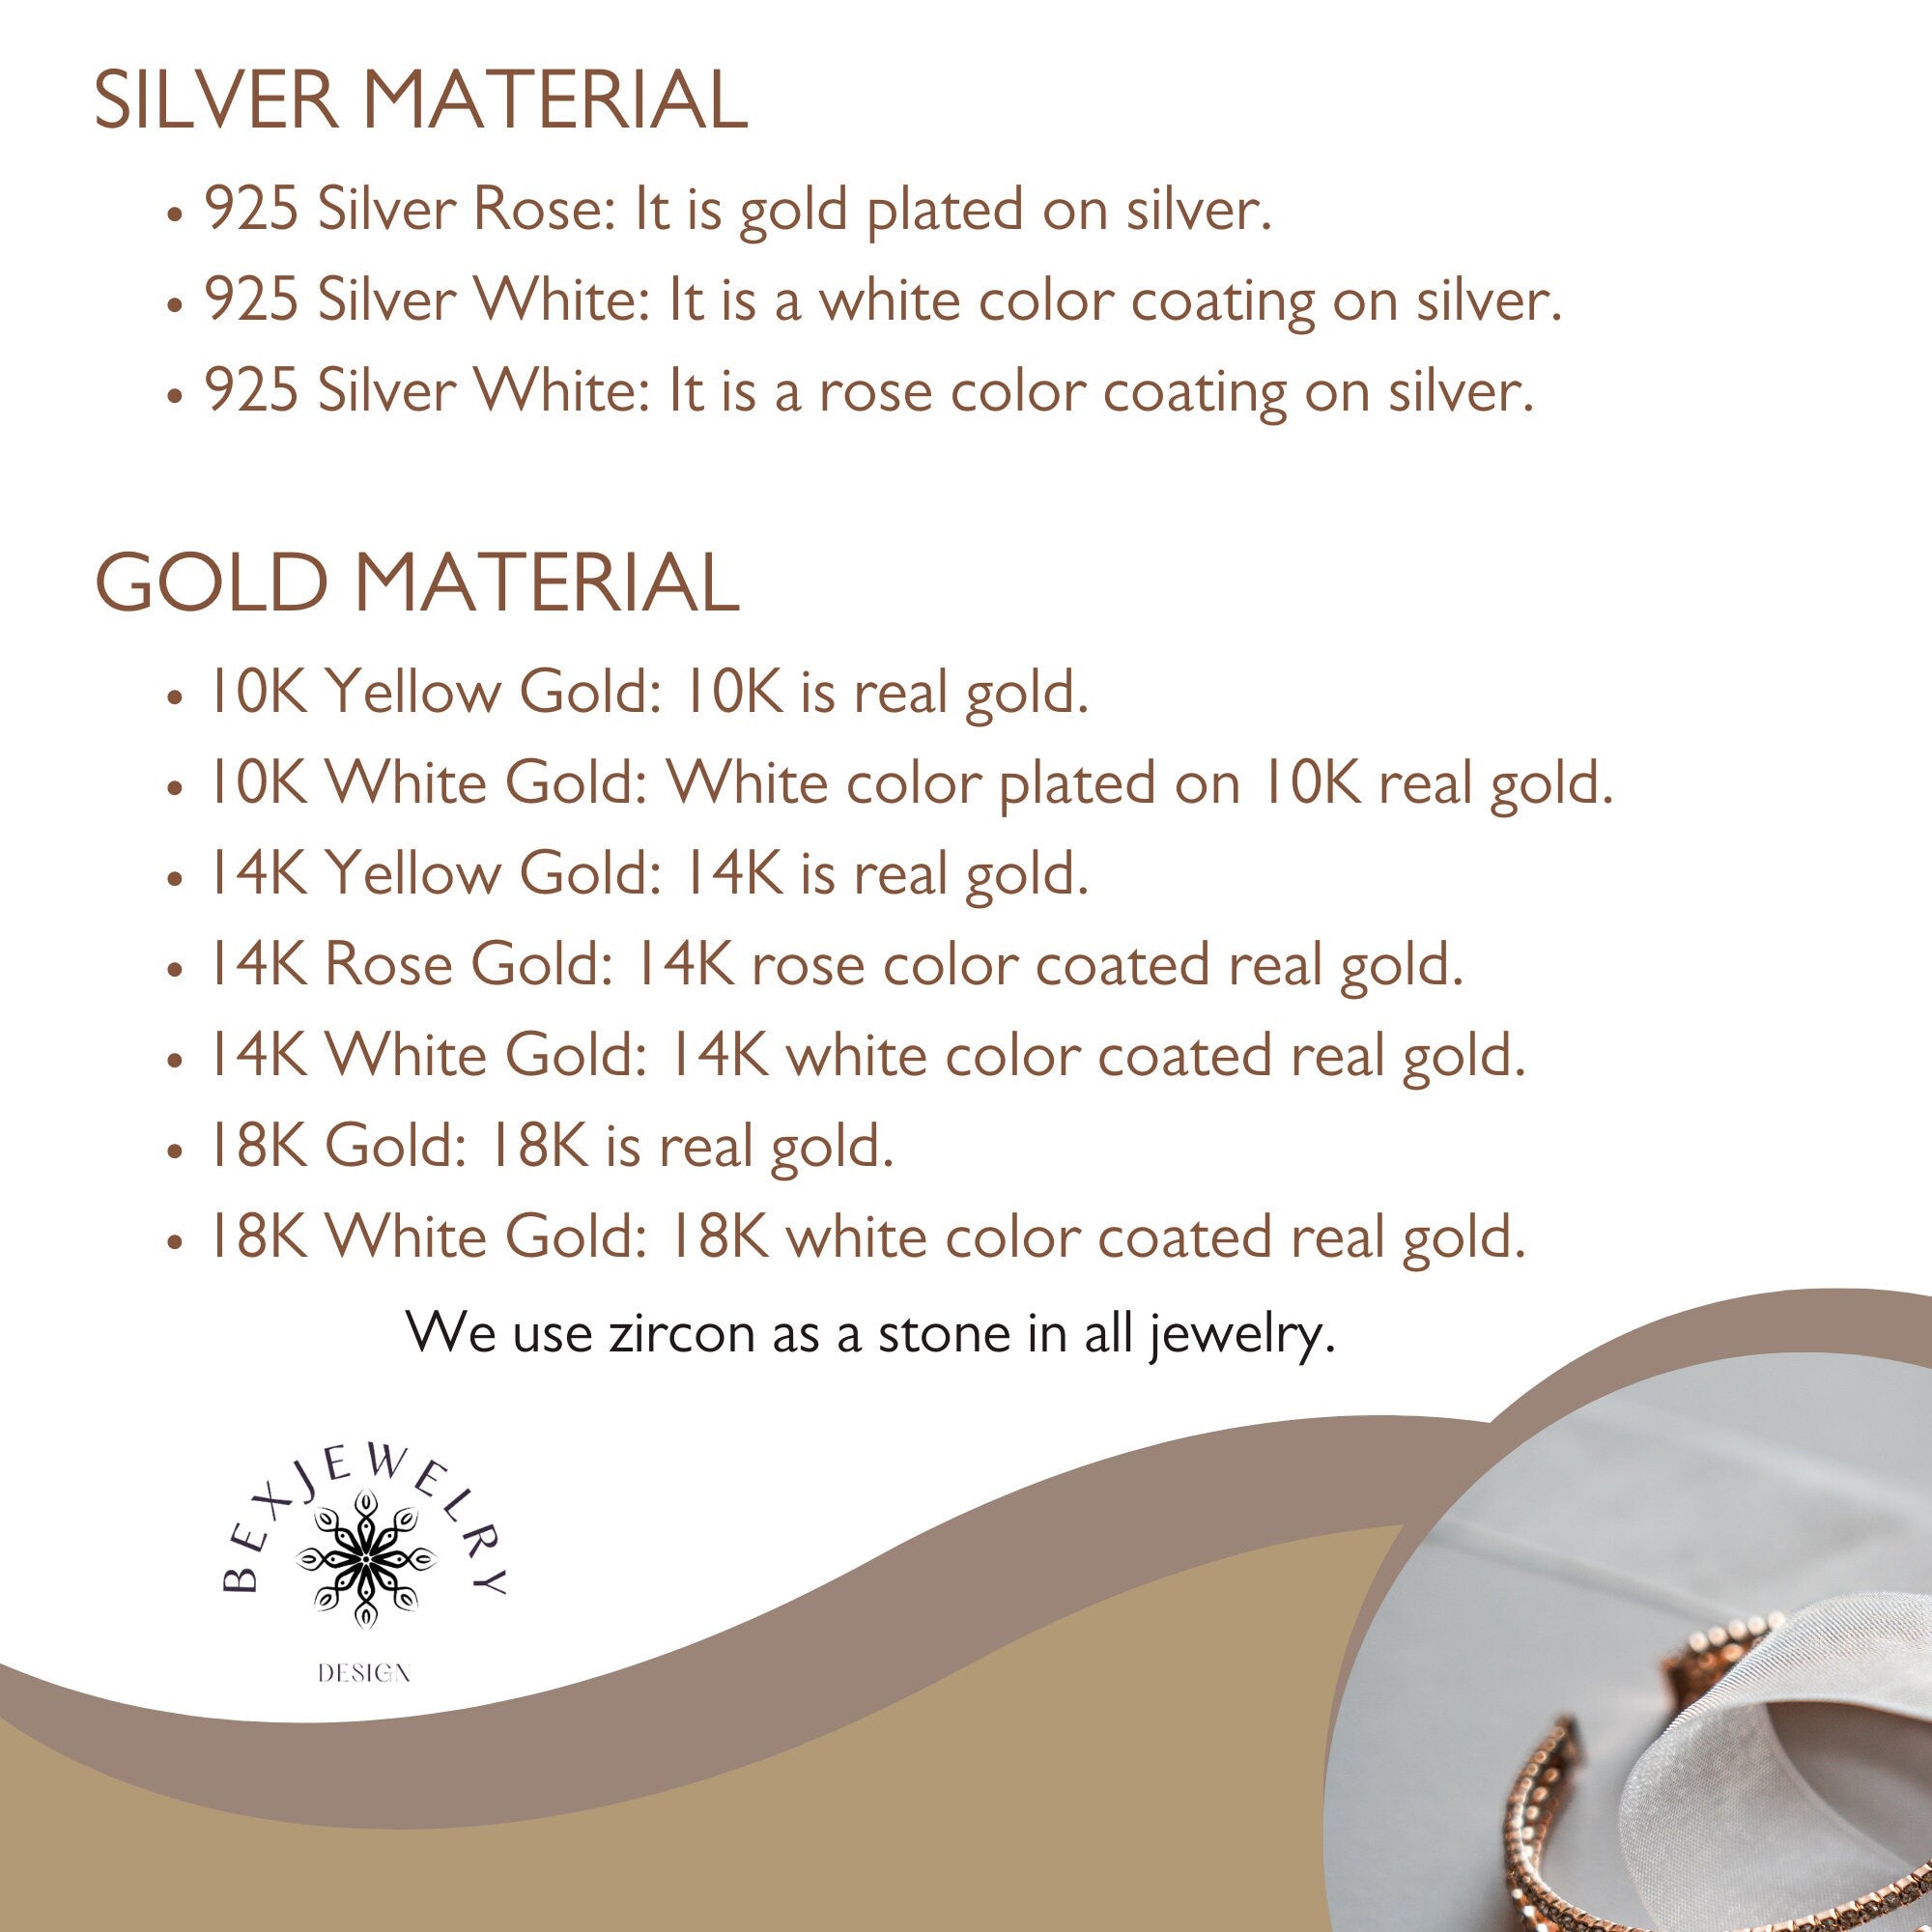 14K Golden North Star Ring - 925 Sterling Silver Celestial Jewelry, Starburst Ring Minimalist Design, Handcrafted Diamond Star Gold Ring